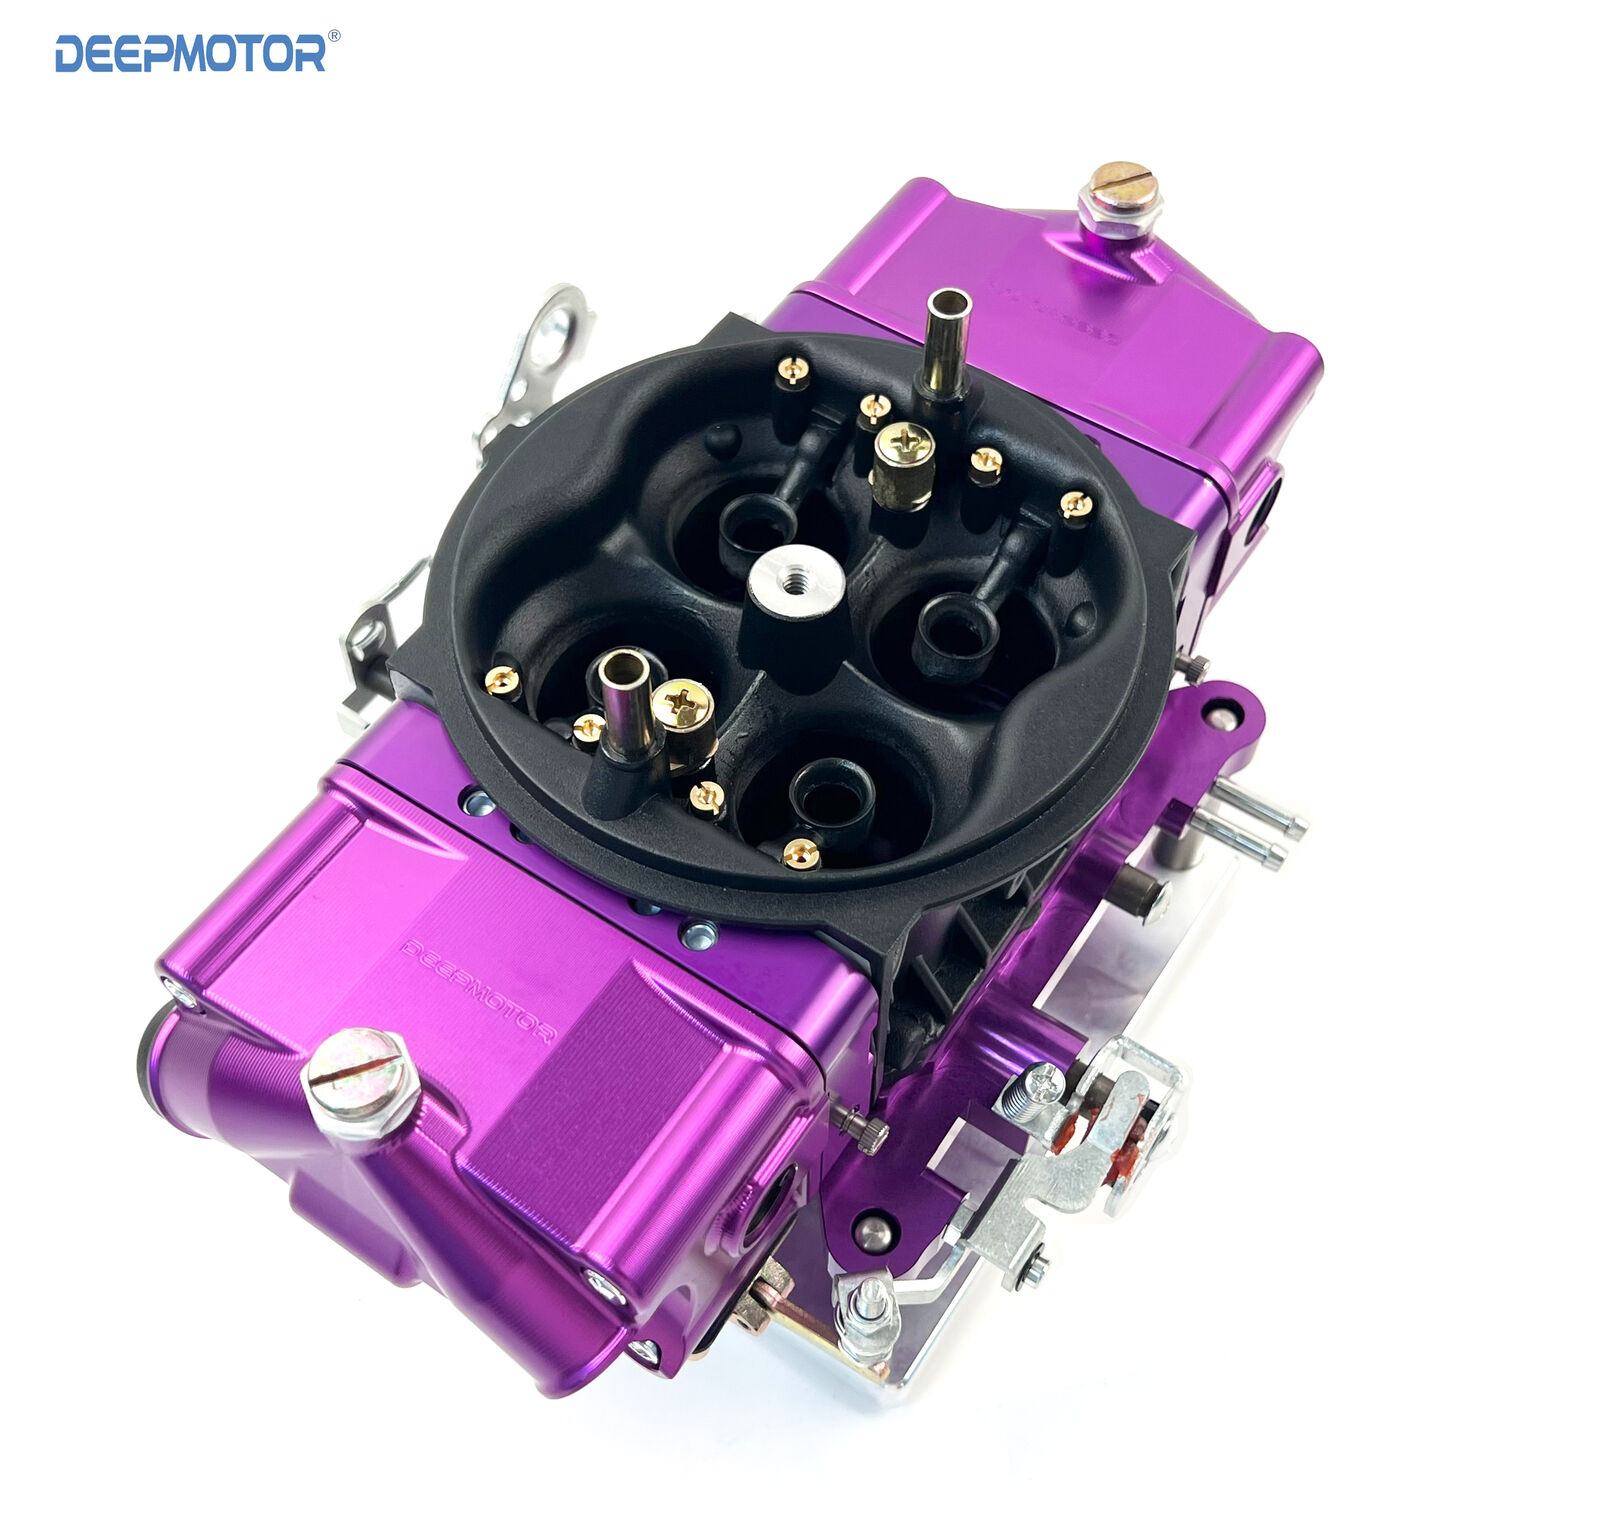 Deepmotor Aluminum CNC 850CFM Carburetor Double Pumper Mechanical Secondary 4150